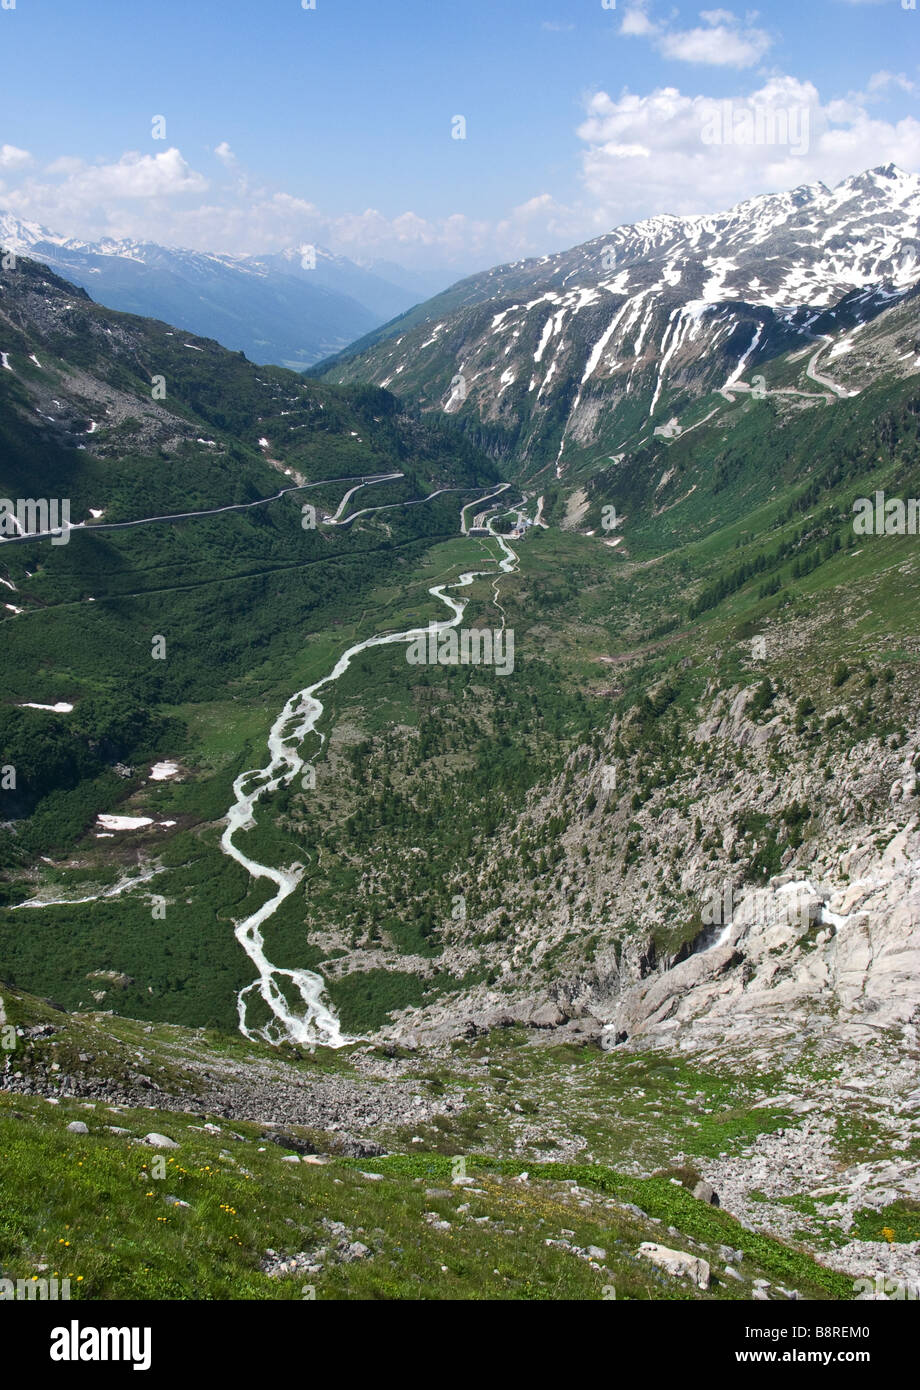 Switzerland, Mountain, Alp, Valley, River Rhone, Landscape, Stock Photo